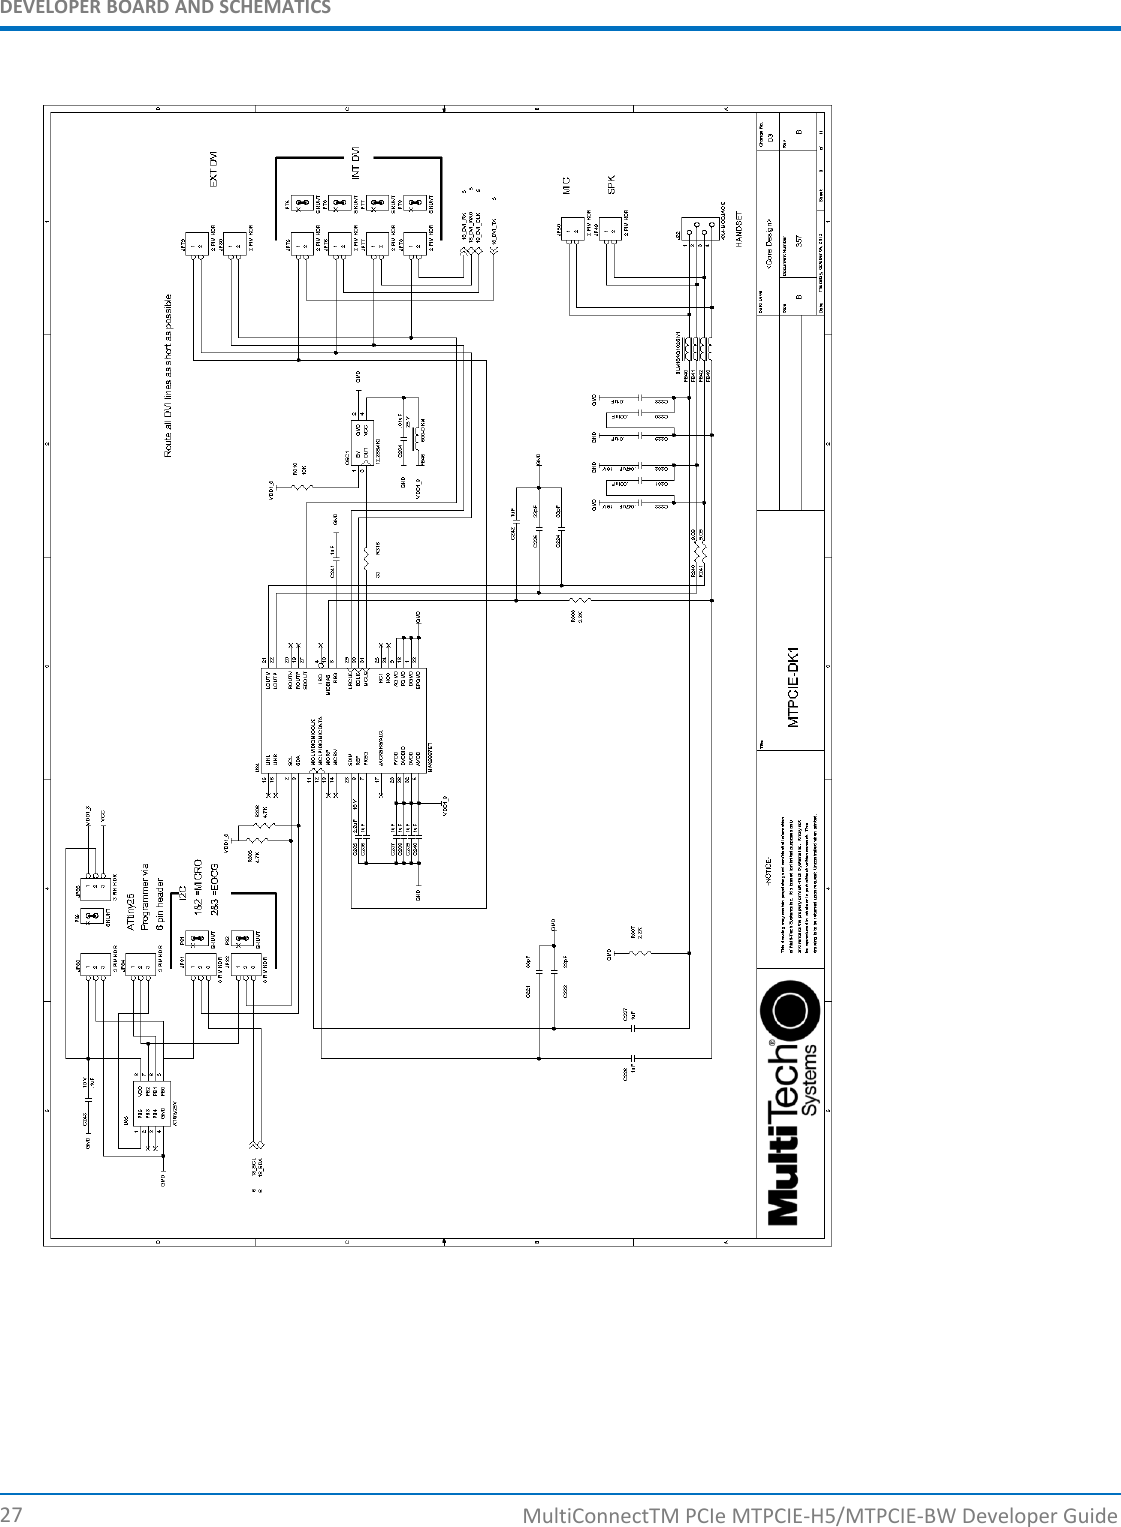 DEVELOPER BOARD AND SCHEMATICS27MultiConnectTM PCIe MTPCIE-H5/MTPCIE-BW Developer Guide